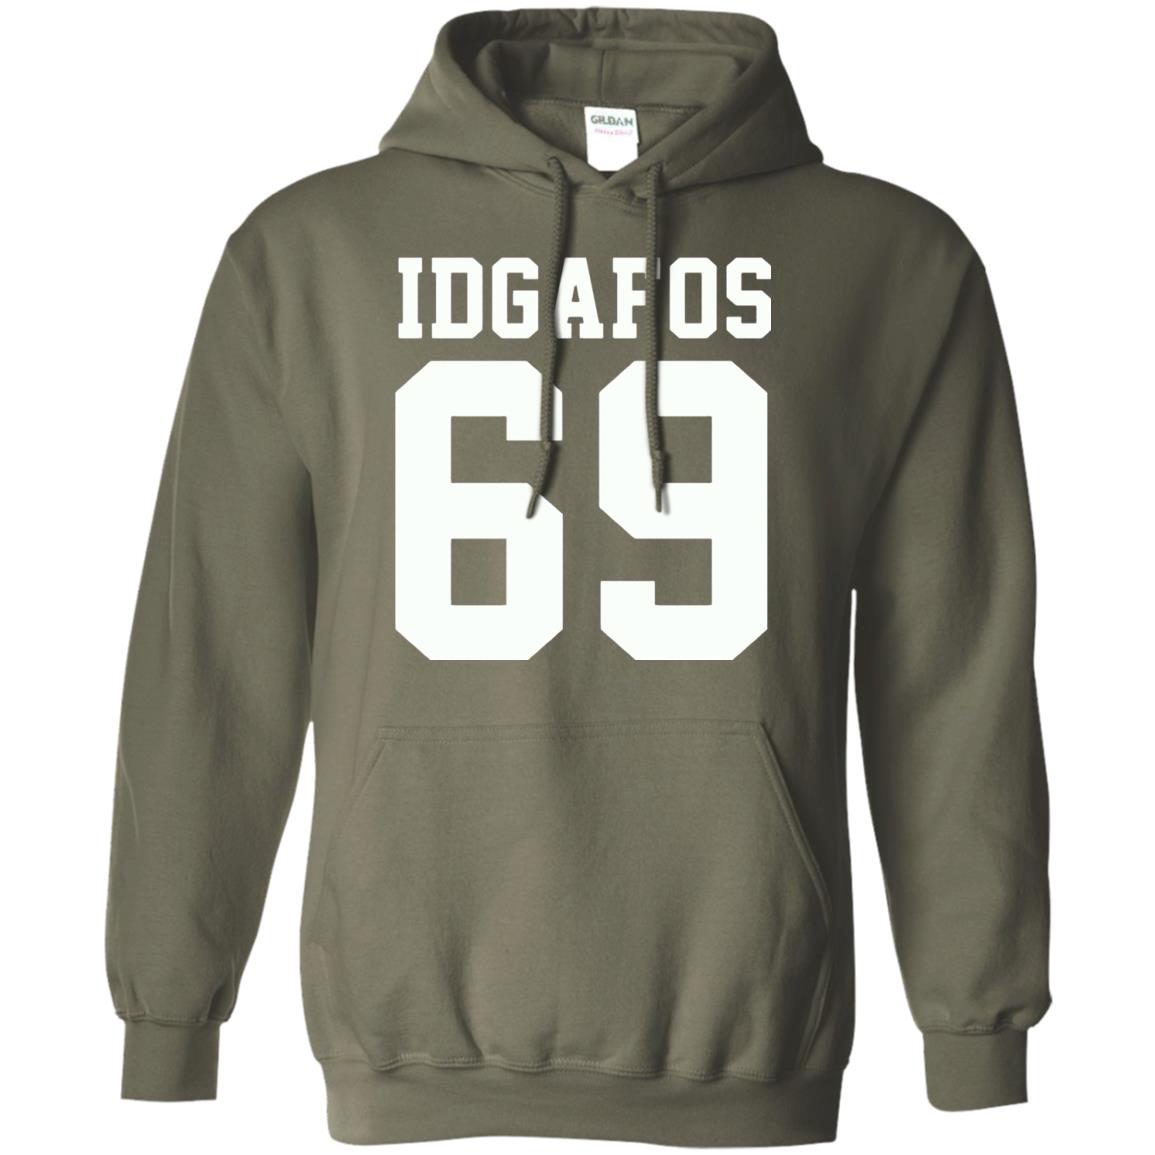 idgafos hoodie - military green